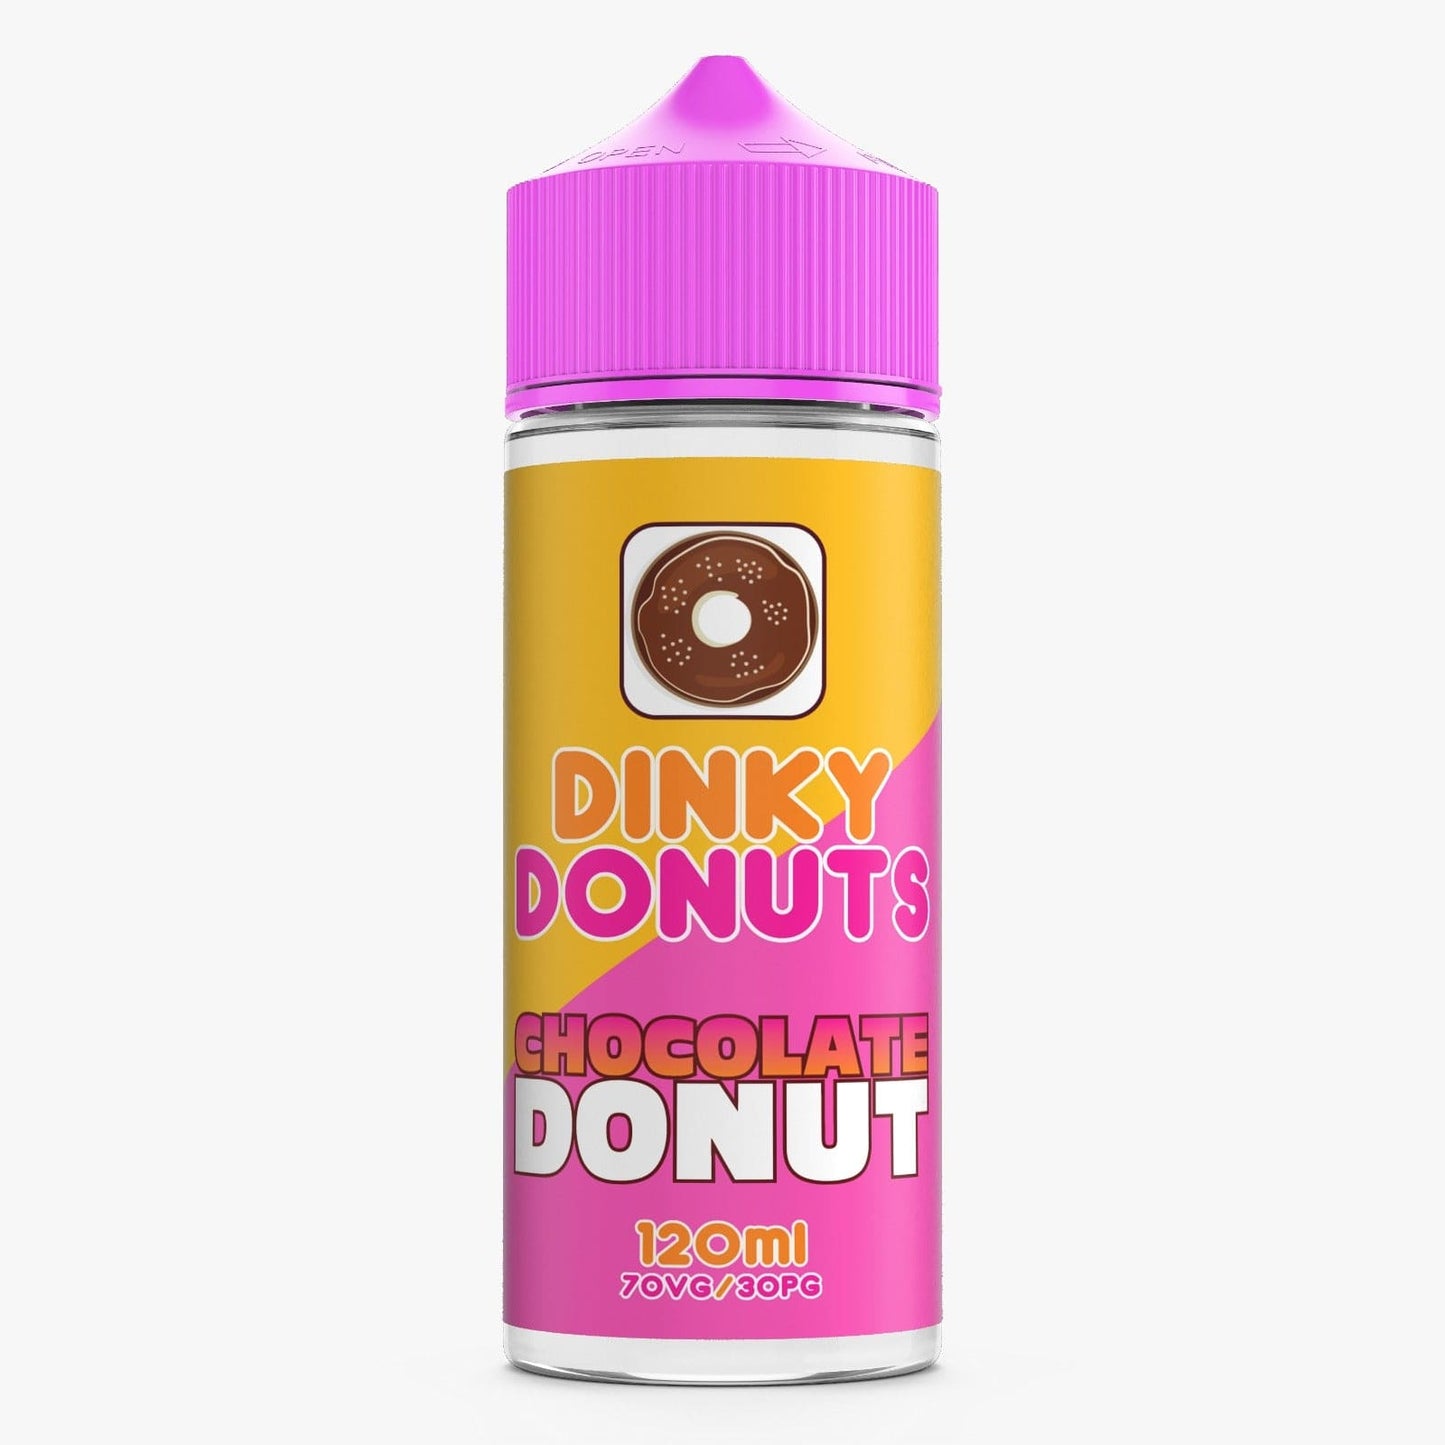 Chocolate Donut by Dinky Donuts 100ml Shortfill E-Liquid